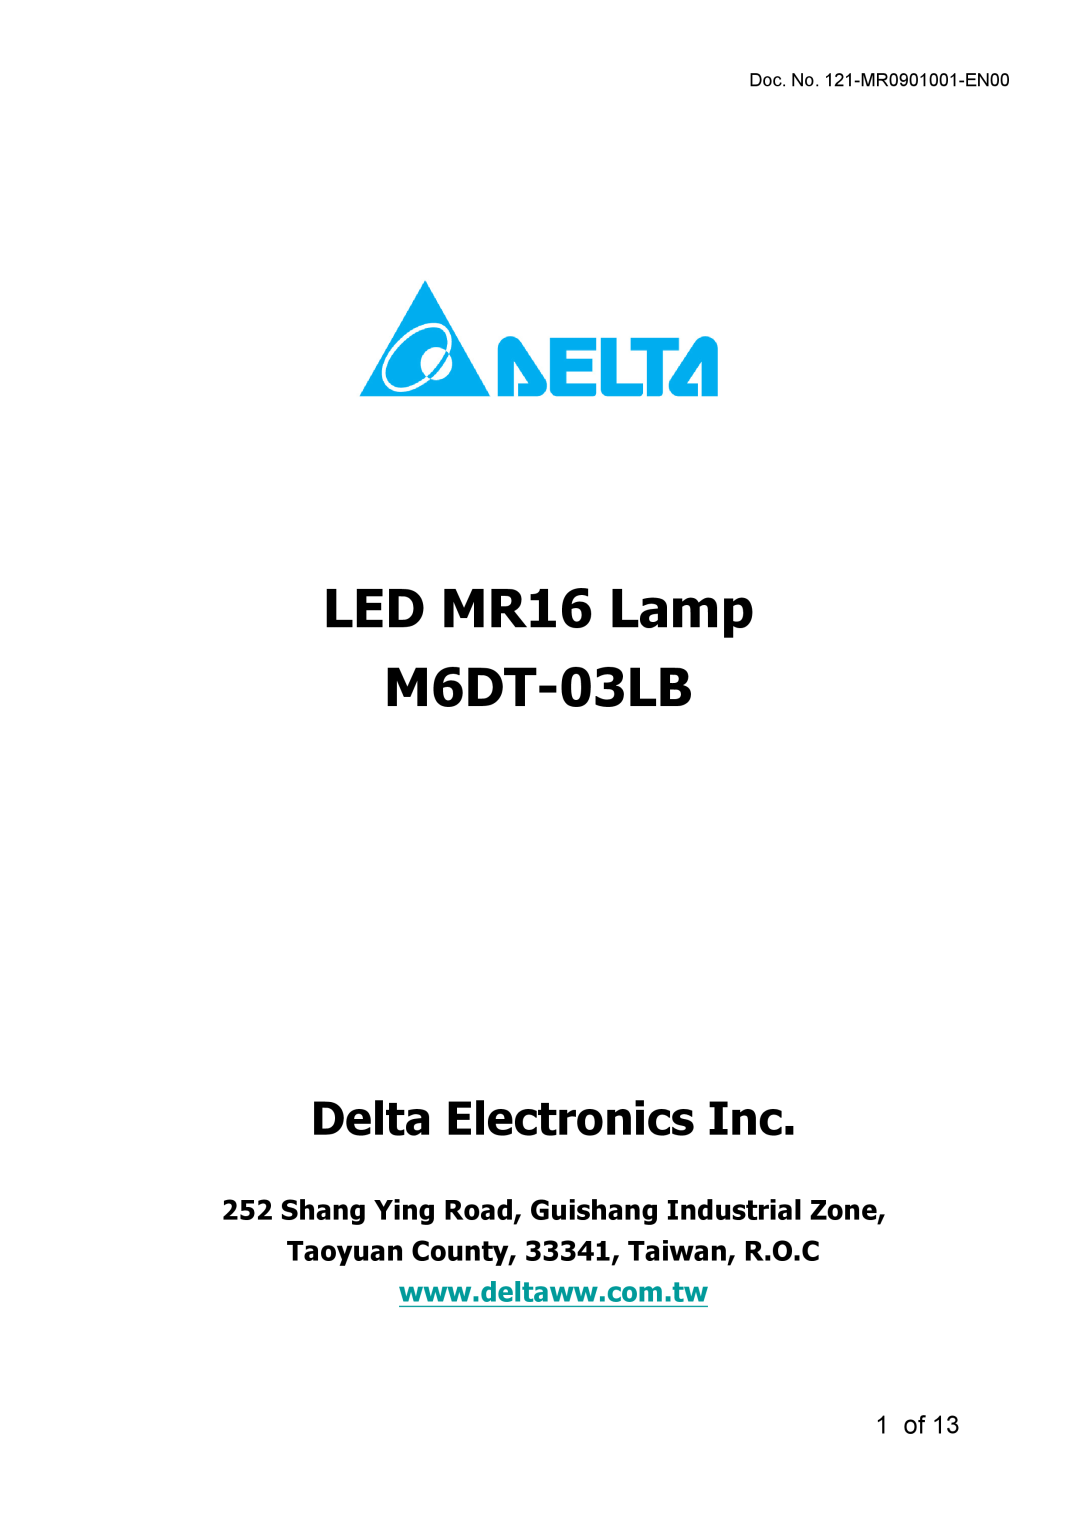 Delta Electronics manual 1 of, Doc. No. 121-MR0901001-EN00, LED MR16 Lamp M6DT-03LB, Delta Electronics Inc 